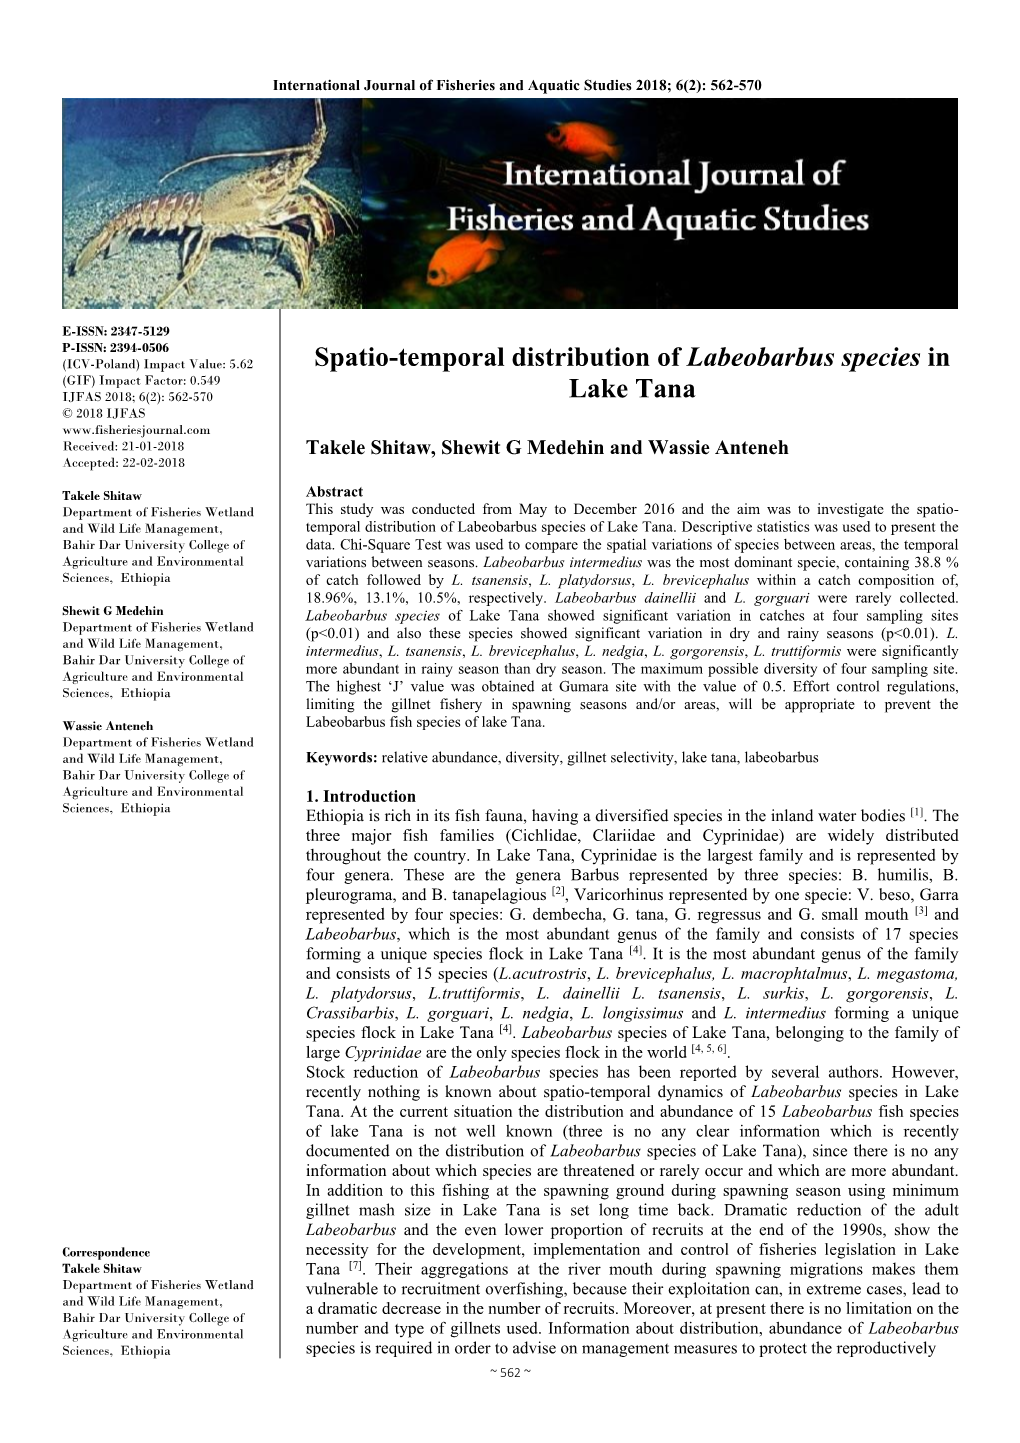 Spatio-Temporal Distribution of Labeobarbus Species in Lake Tana